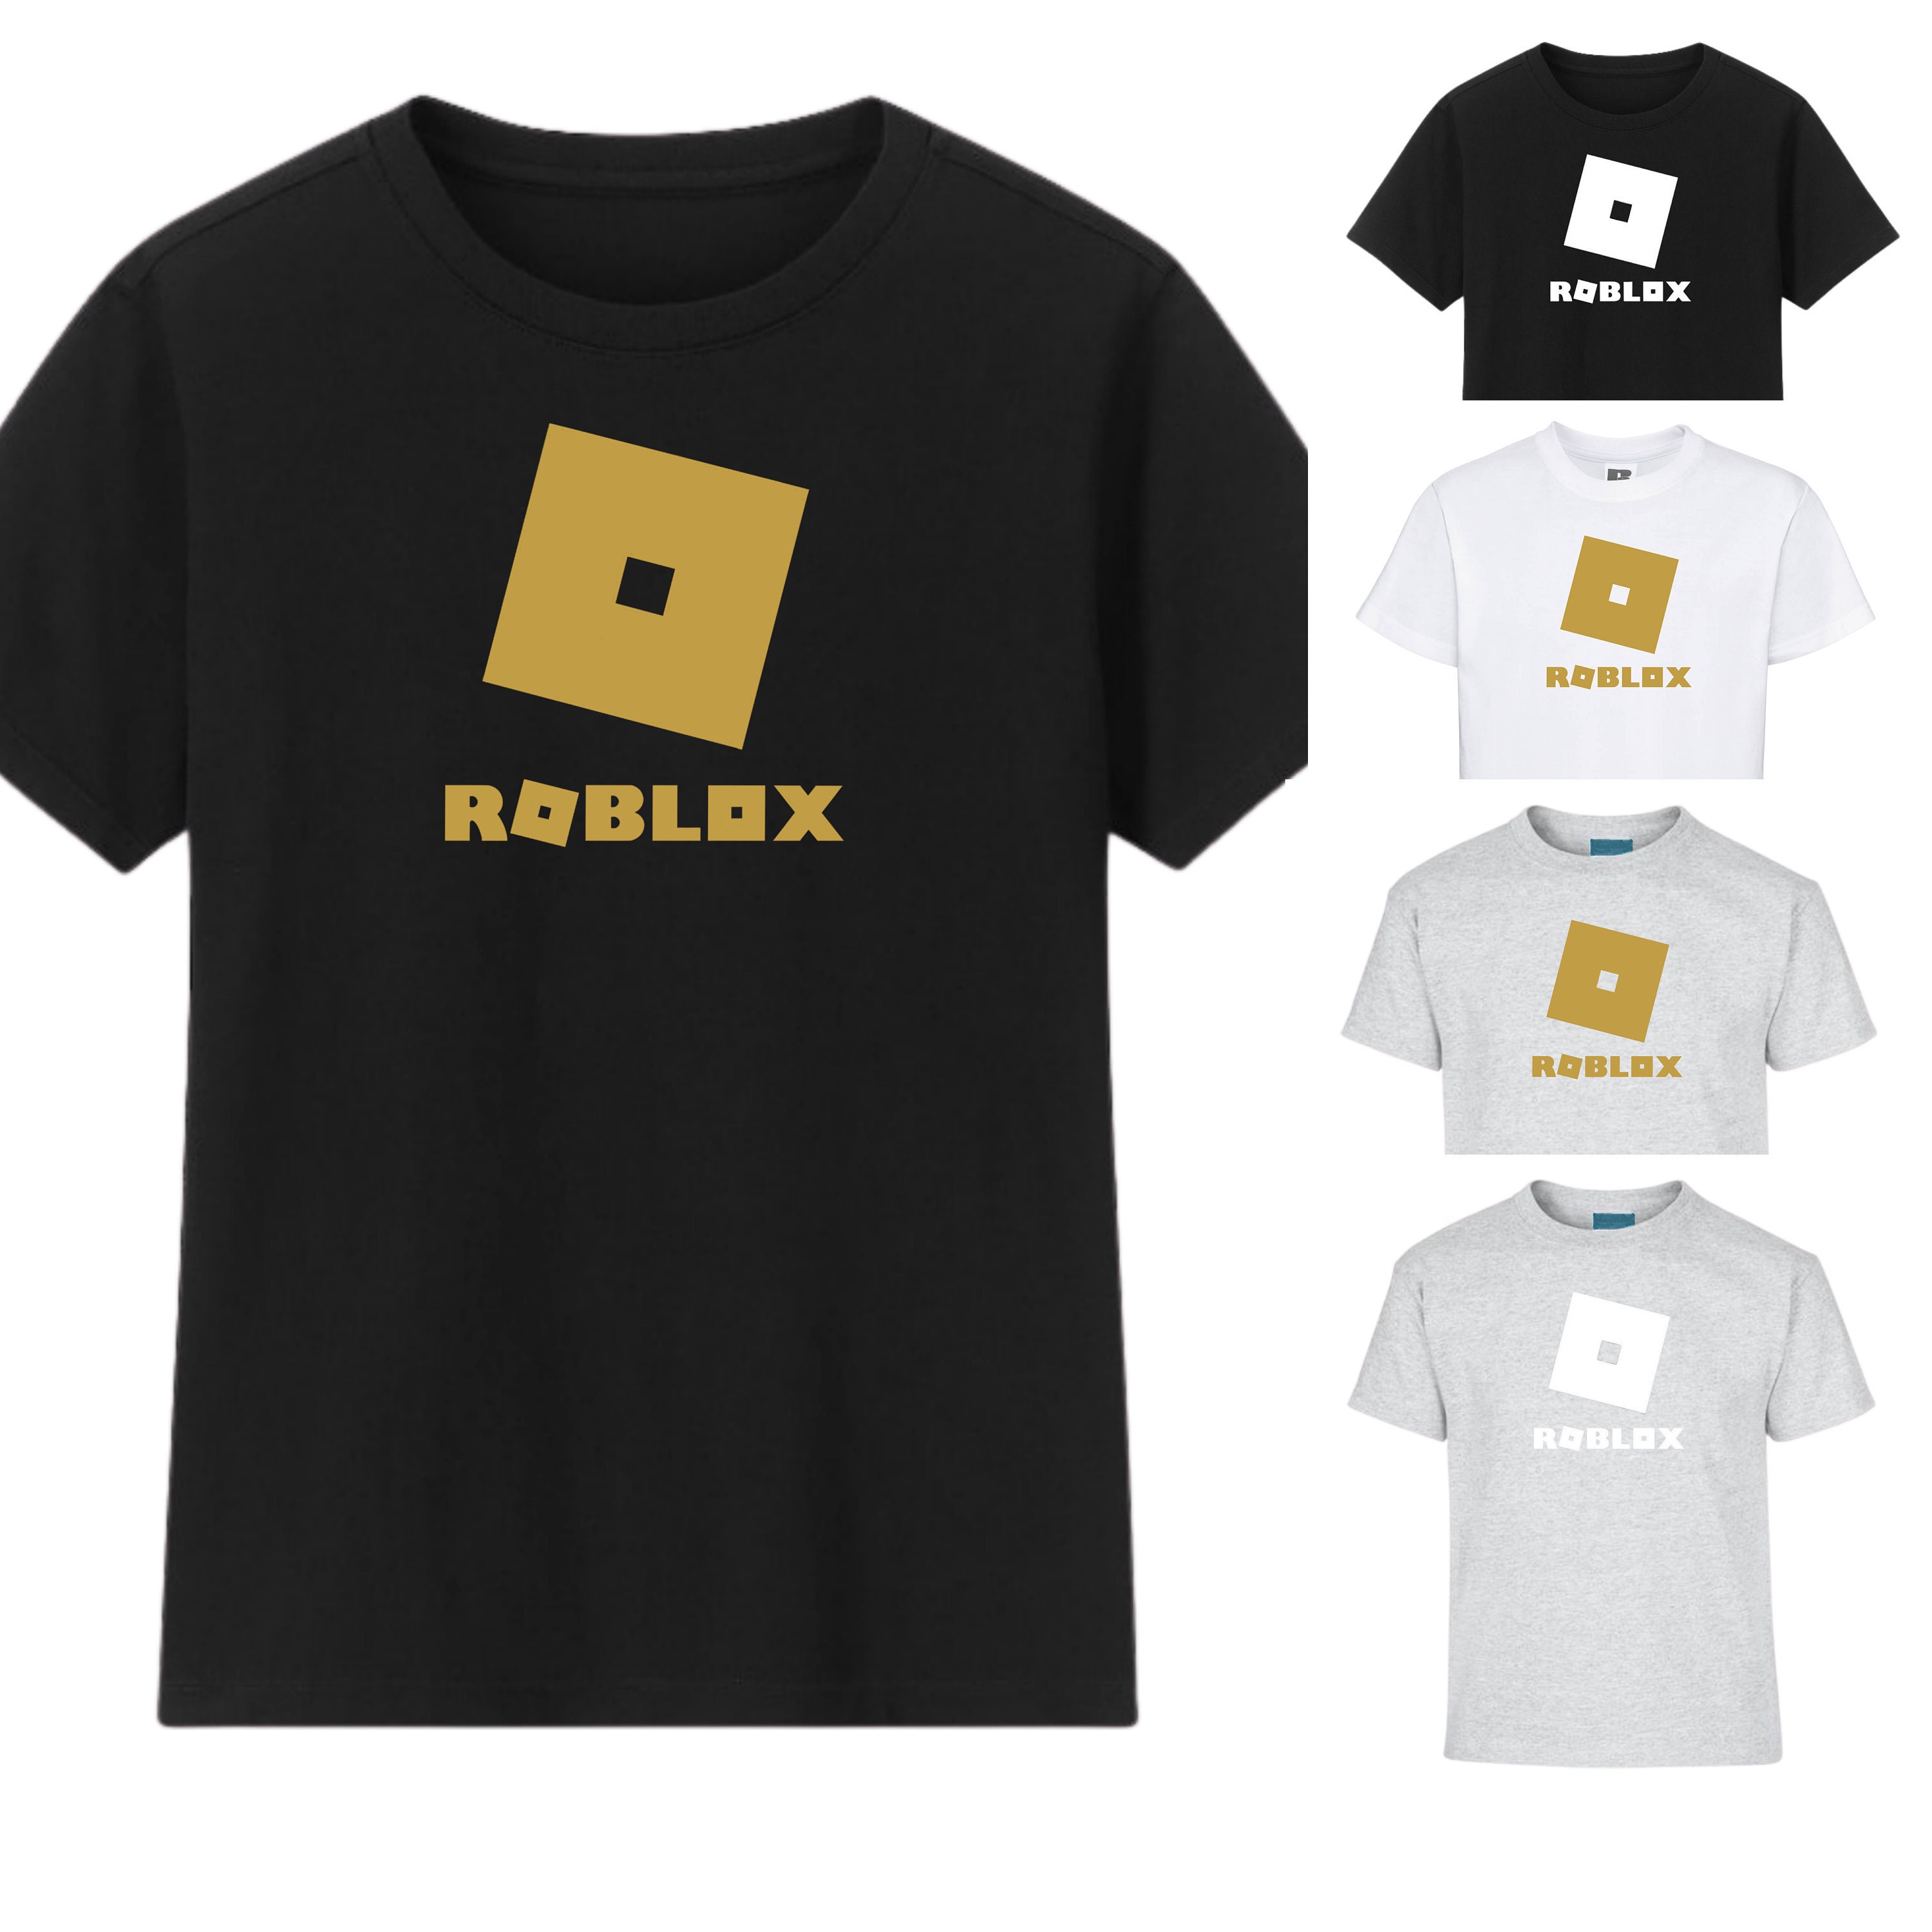 Roblox Face Kids T-Shirt Tee Top Gaming Gamer Boys Girls